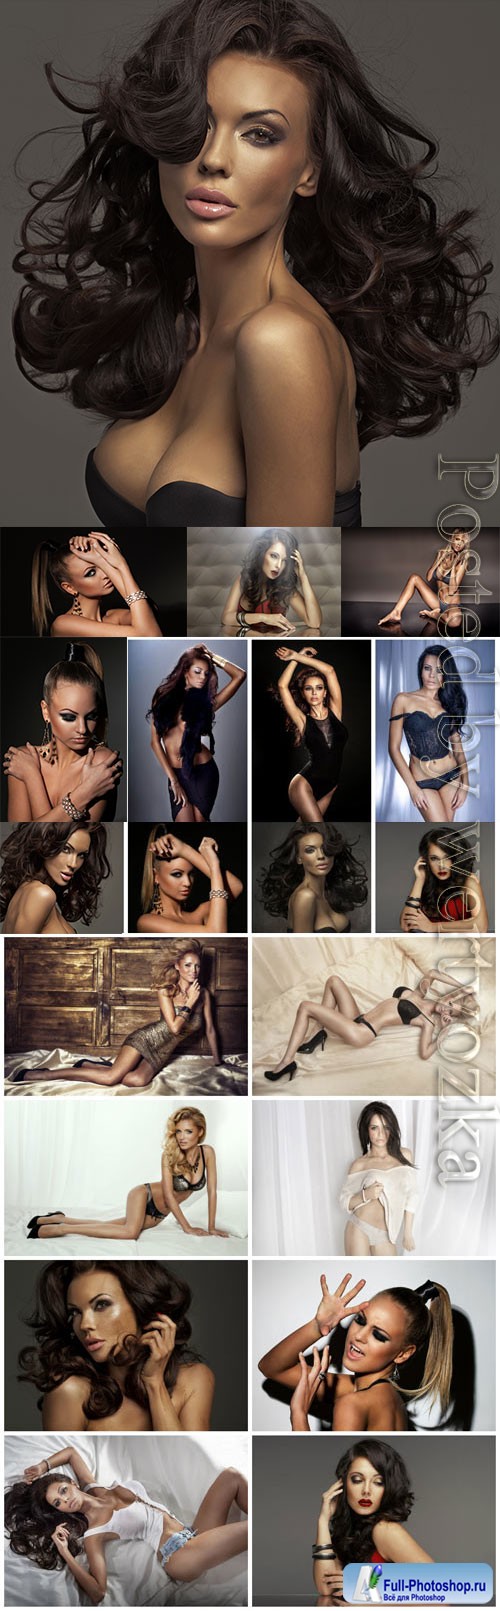 Luxury women in lingerie posing stock photo vol 19